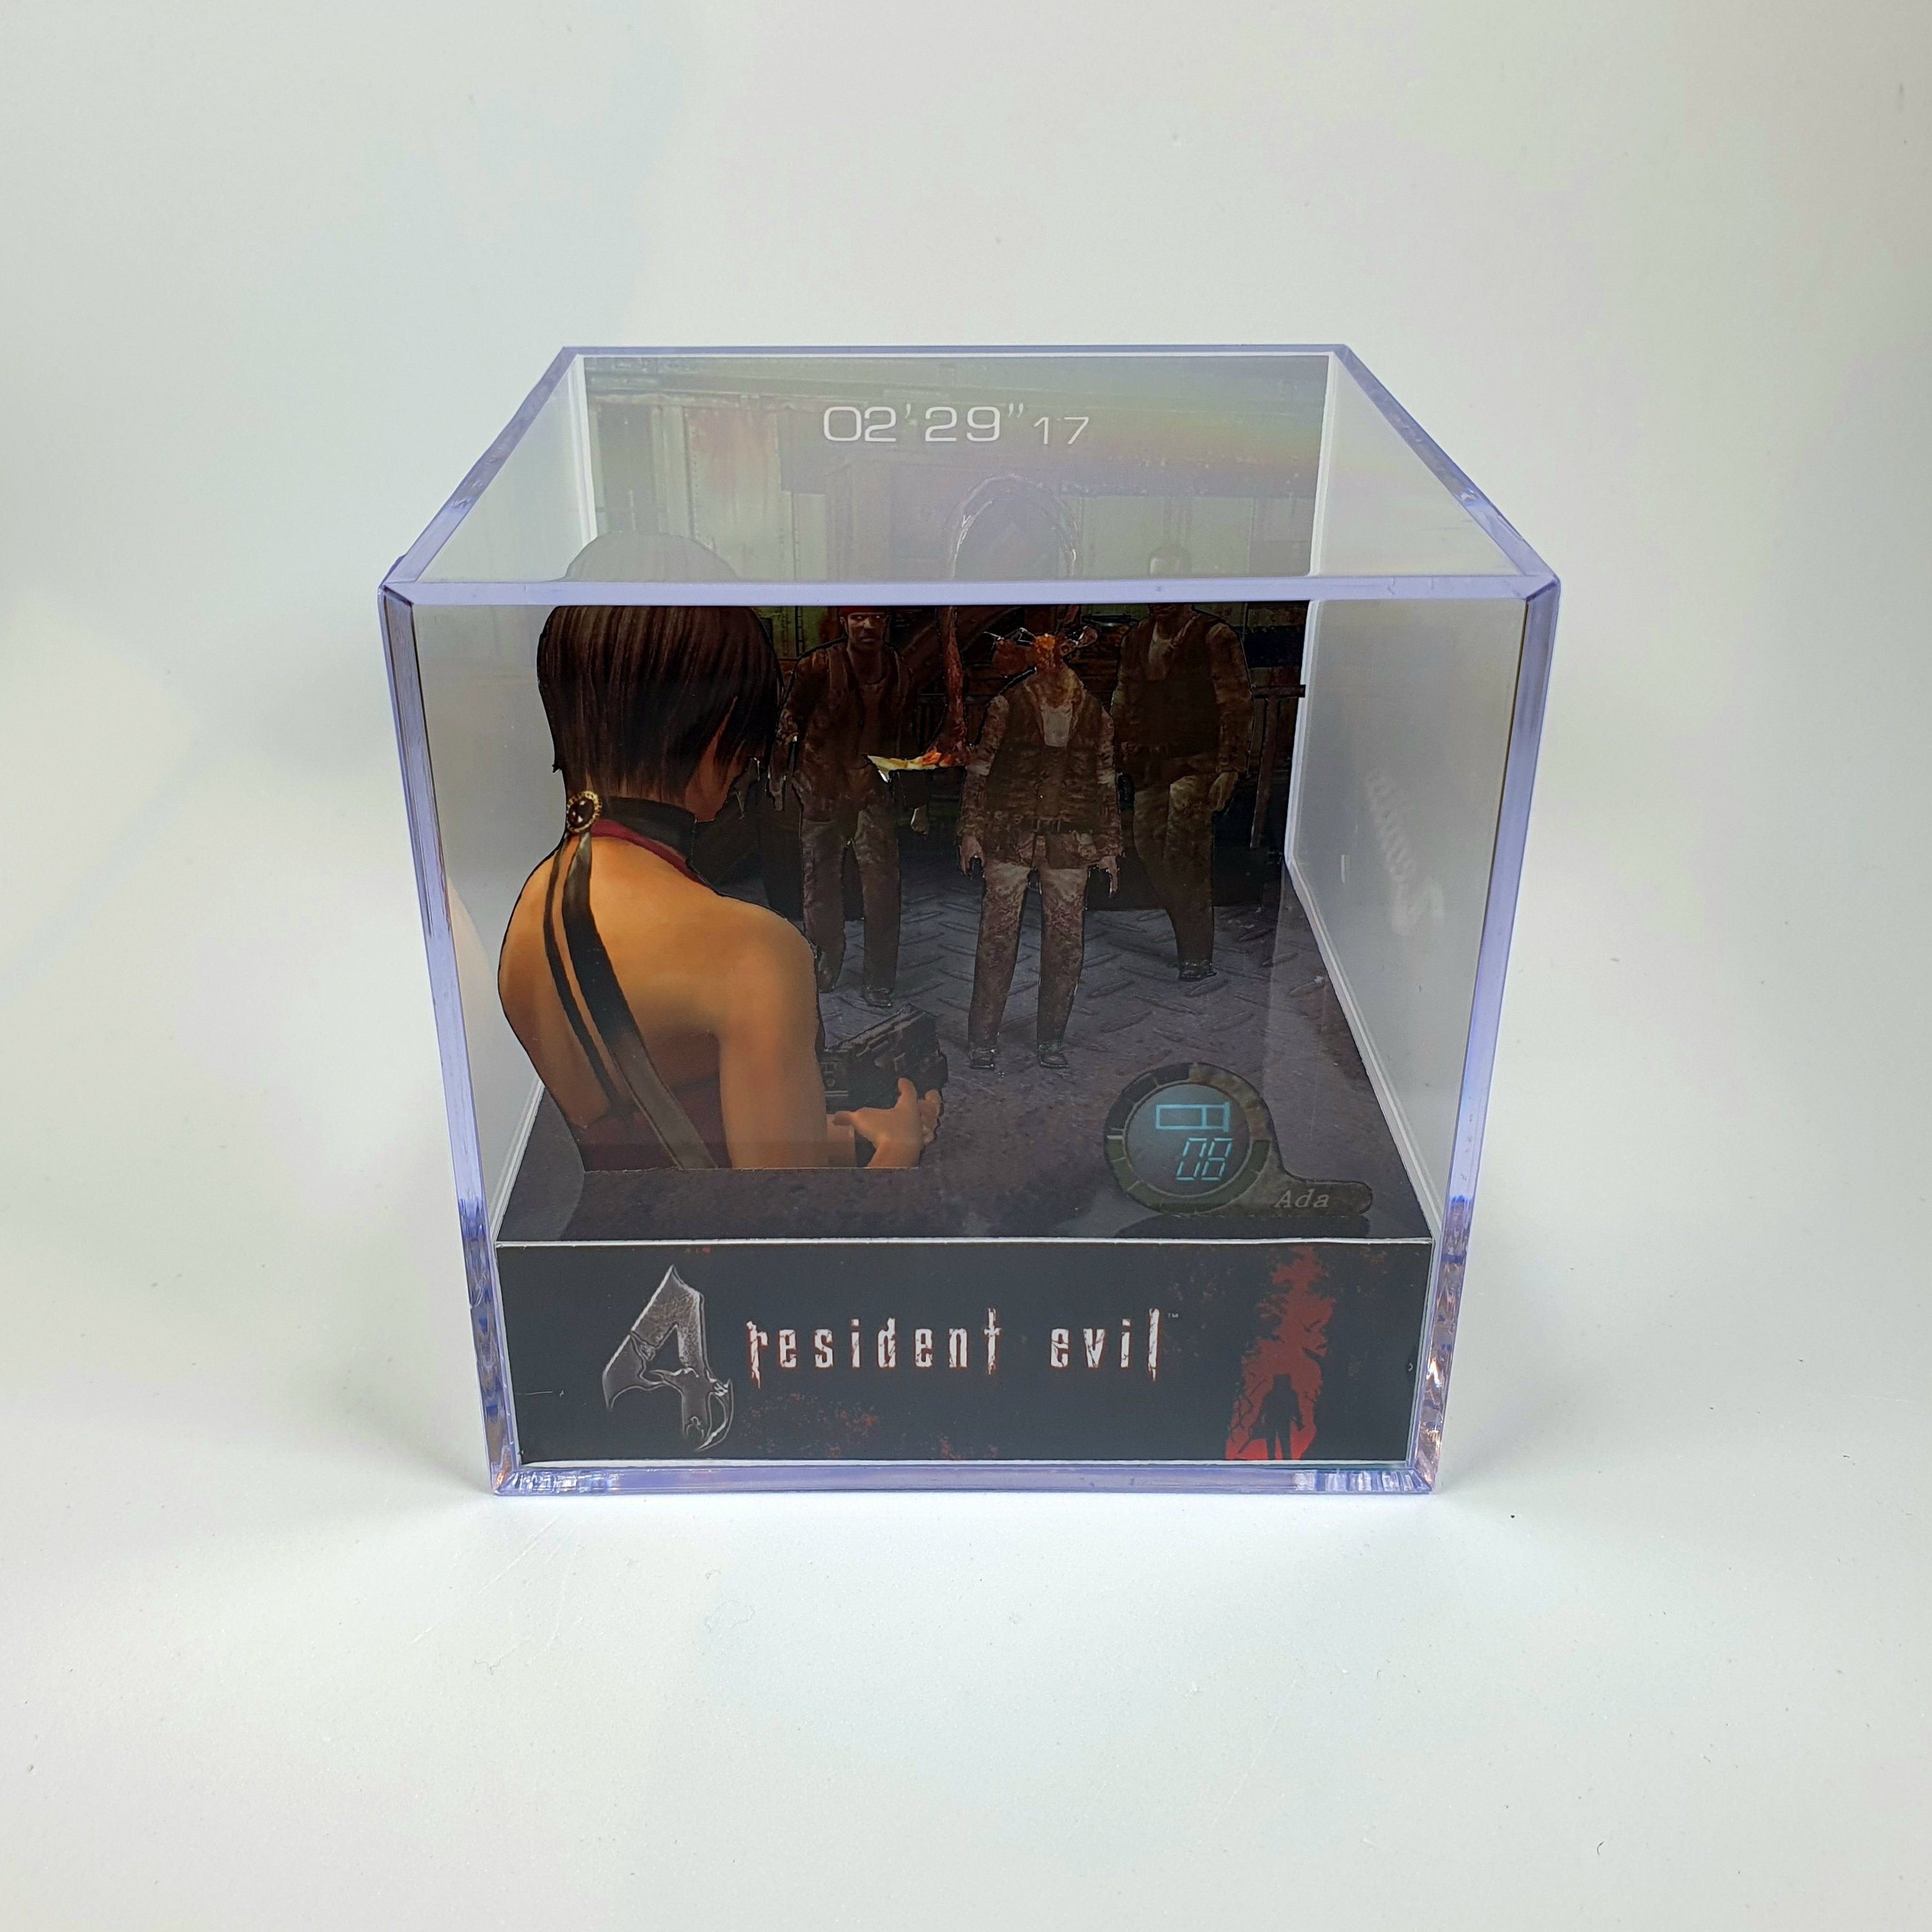 Resident Evil 5 Mod - Ada Wong Mercenaria Re2 HD 100% 